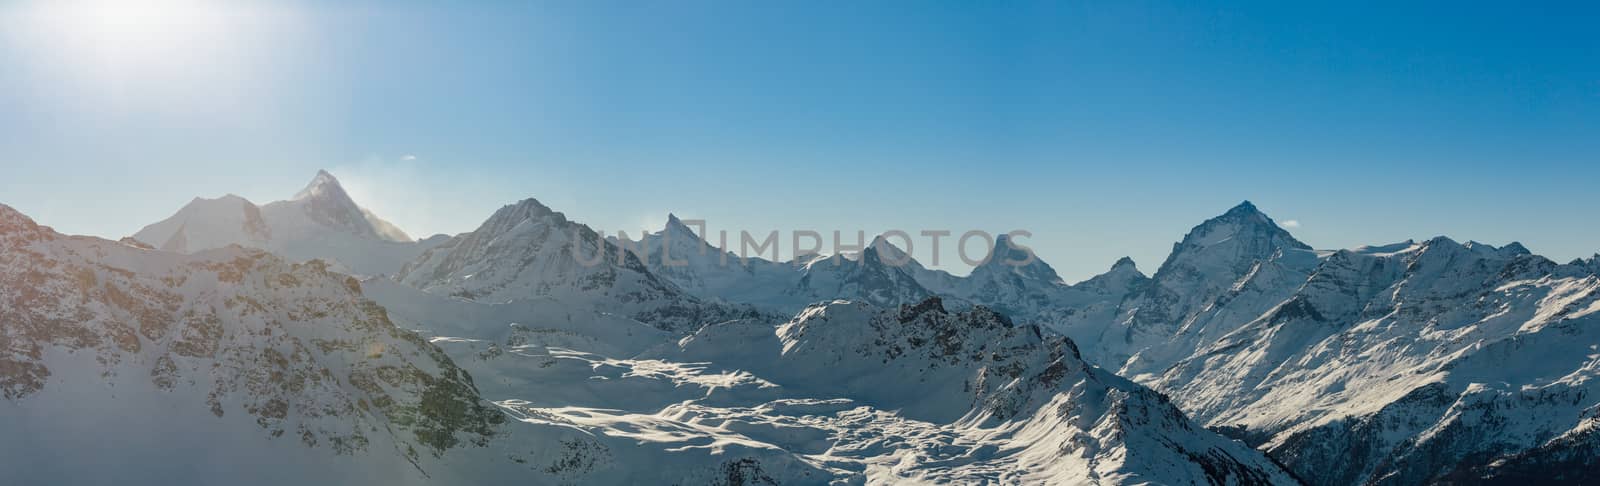 Panoramic view of some of Switzerland's highest mountains (Dent Blanche, Matterhorn, Weisshorn, Bishorn).